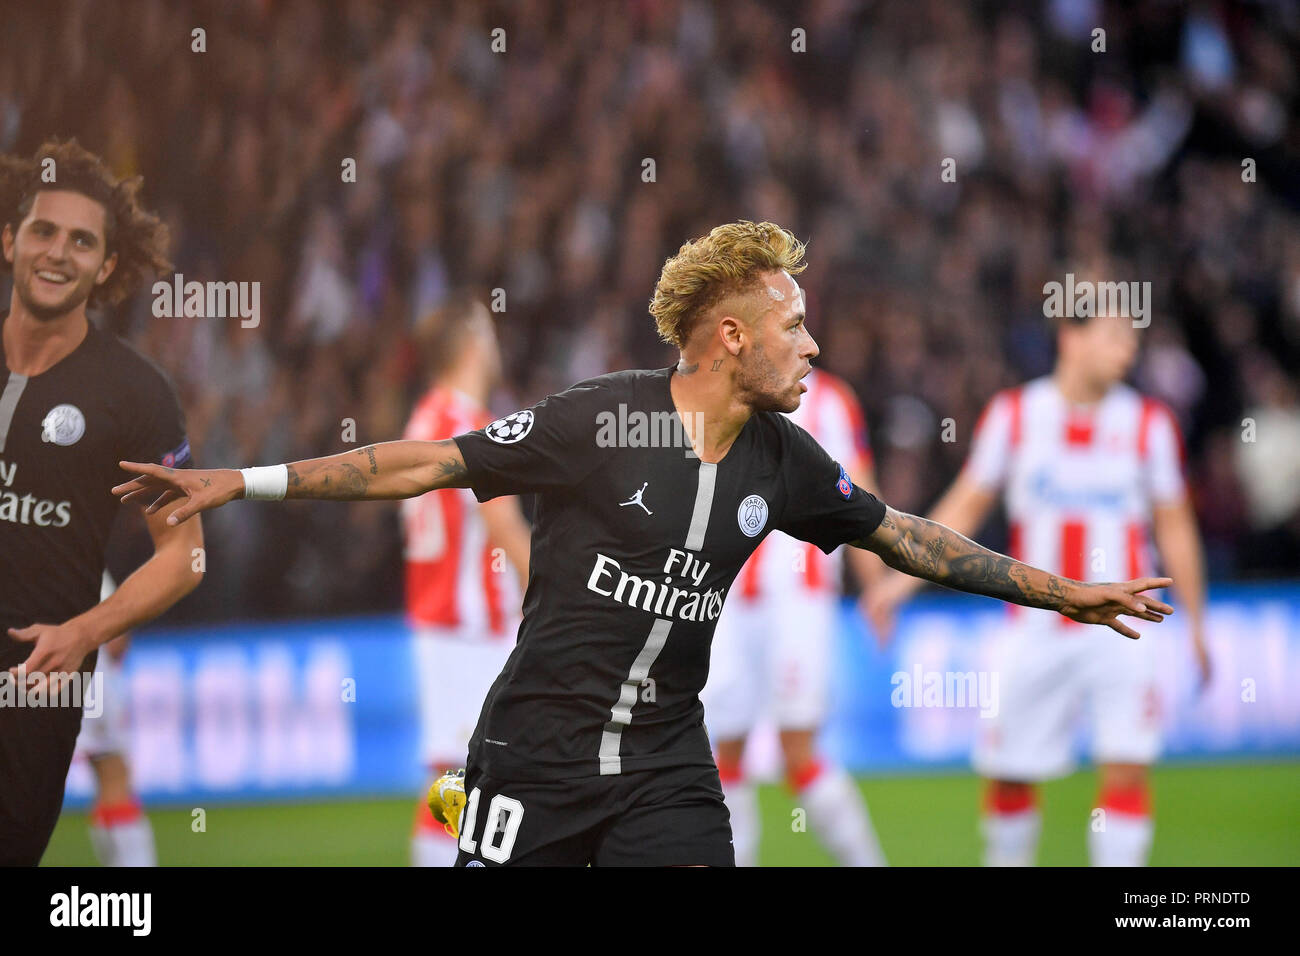 181004) -- PARIS, Oct. 4, 2018 (Xinhua) -- Neymar of Paris Saint-Germain  celebrates scoring during the UEFA Champions League group C match 2nd round  between Paris Saint-Germain and Red Star Belgrade in